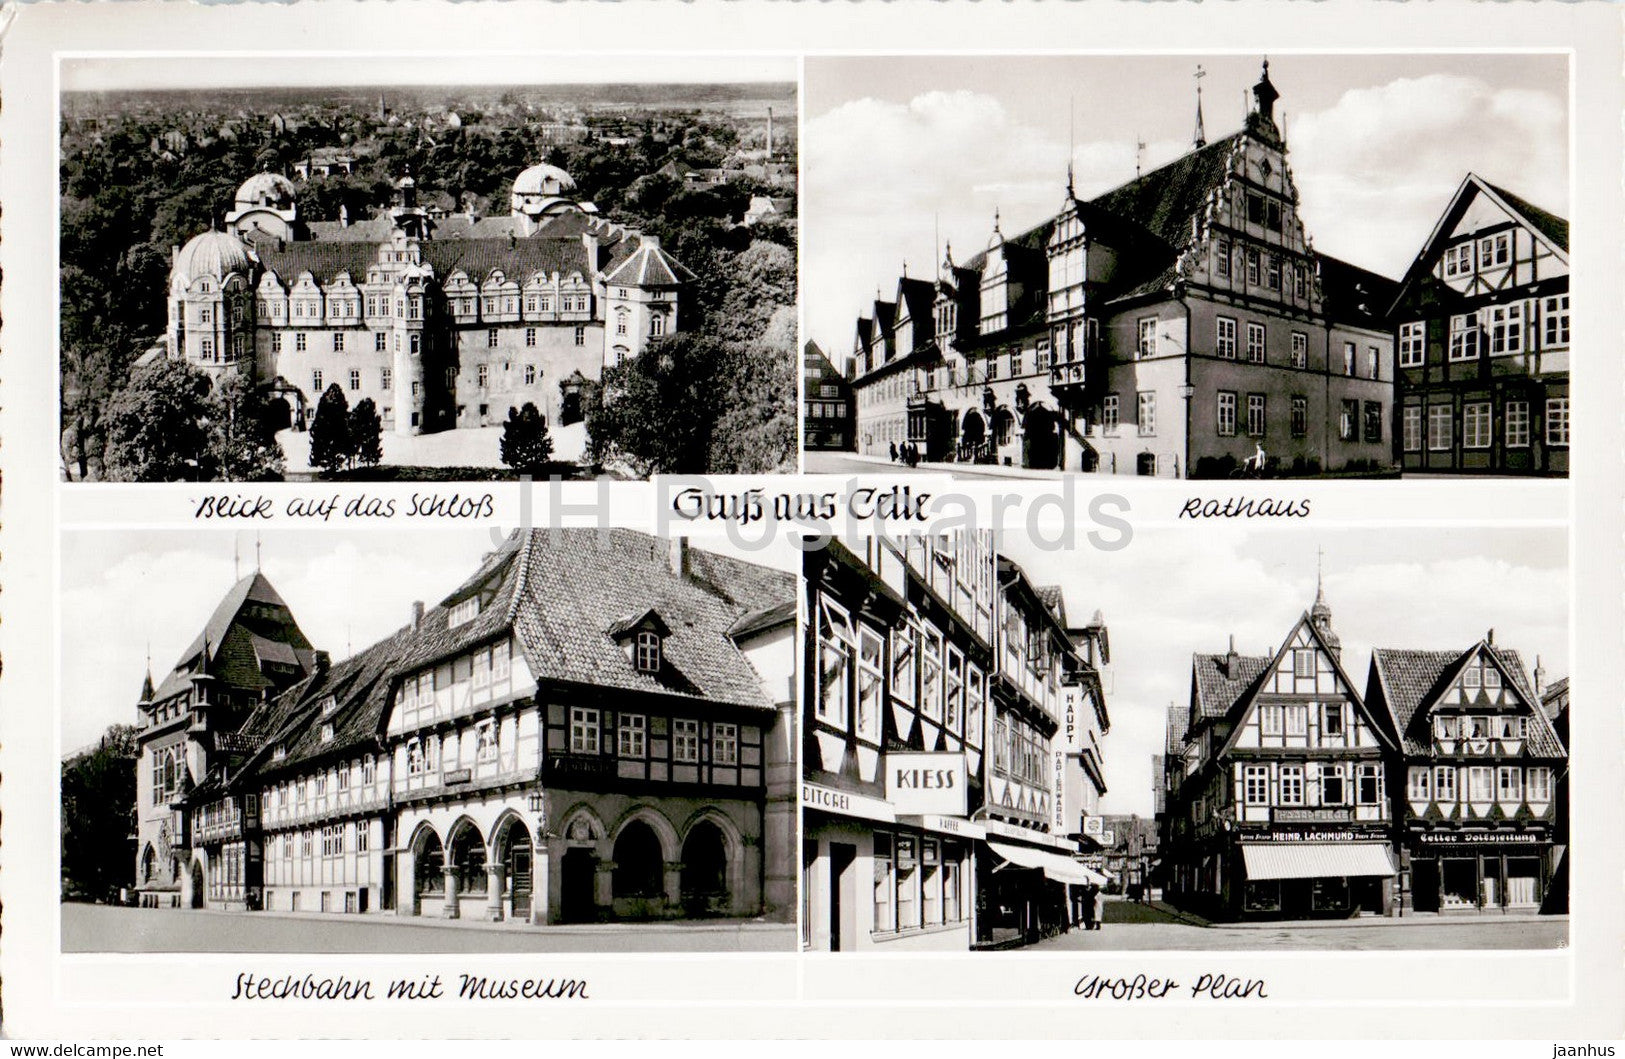 Gruss aus Celle - Schloss - Rathaus - Stechbahn mit Museum - Grosser Plan - old postcard - Germany - unused - JH Postcards